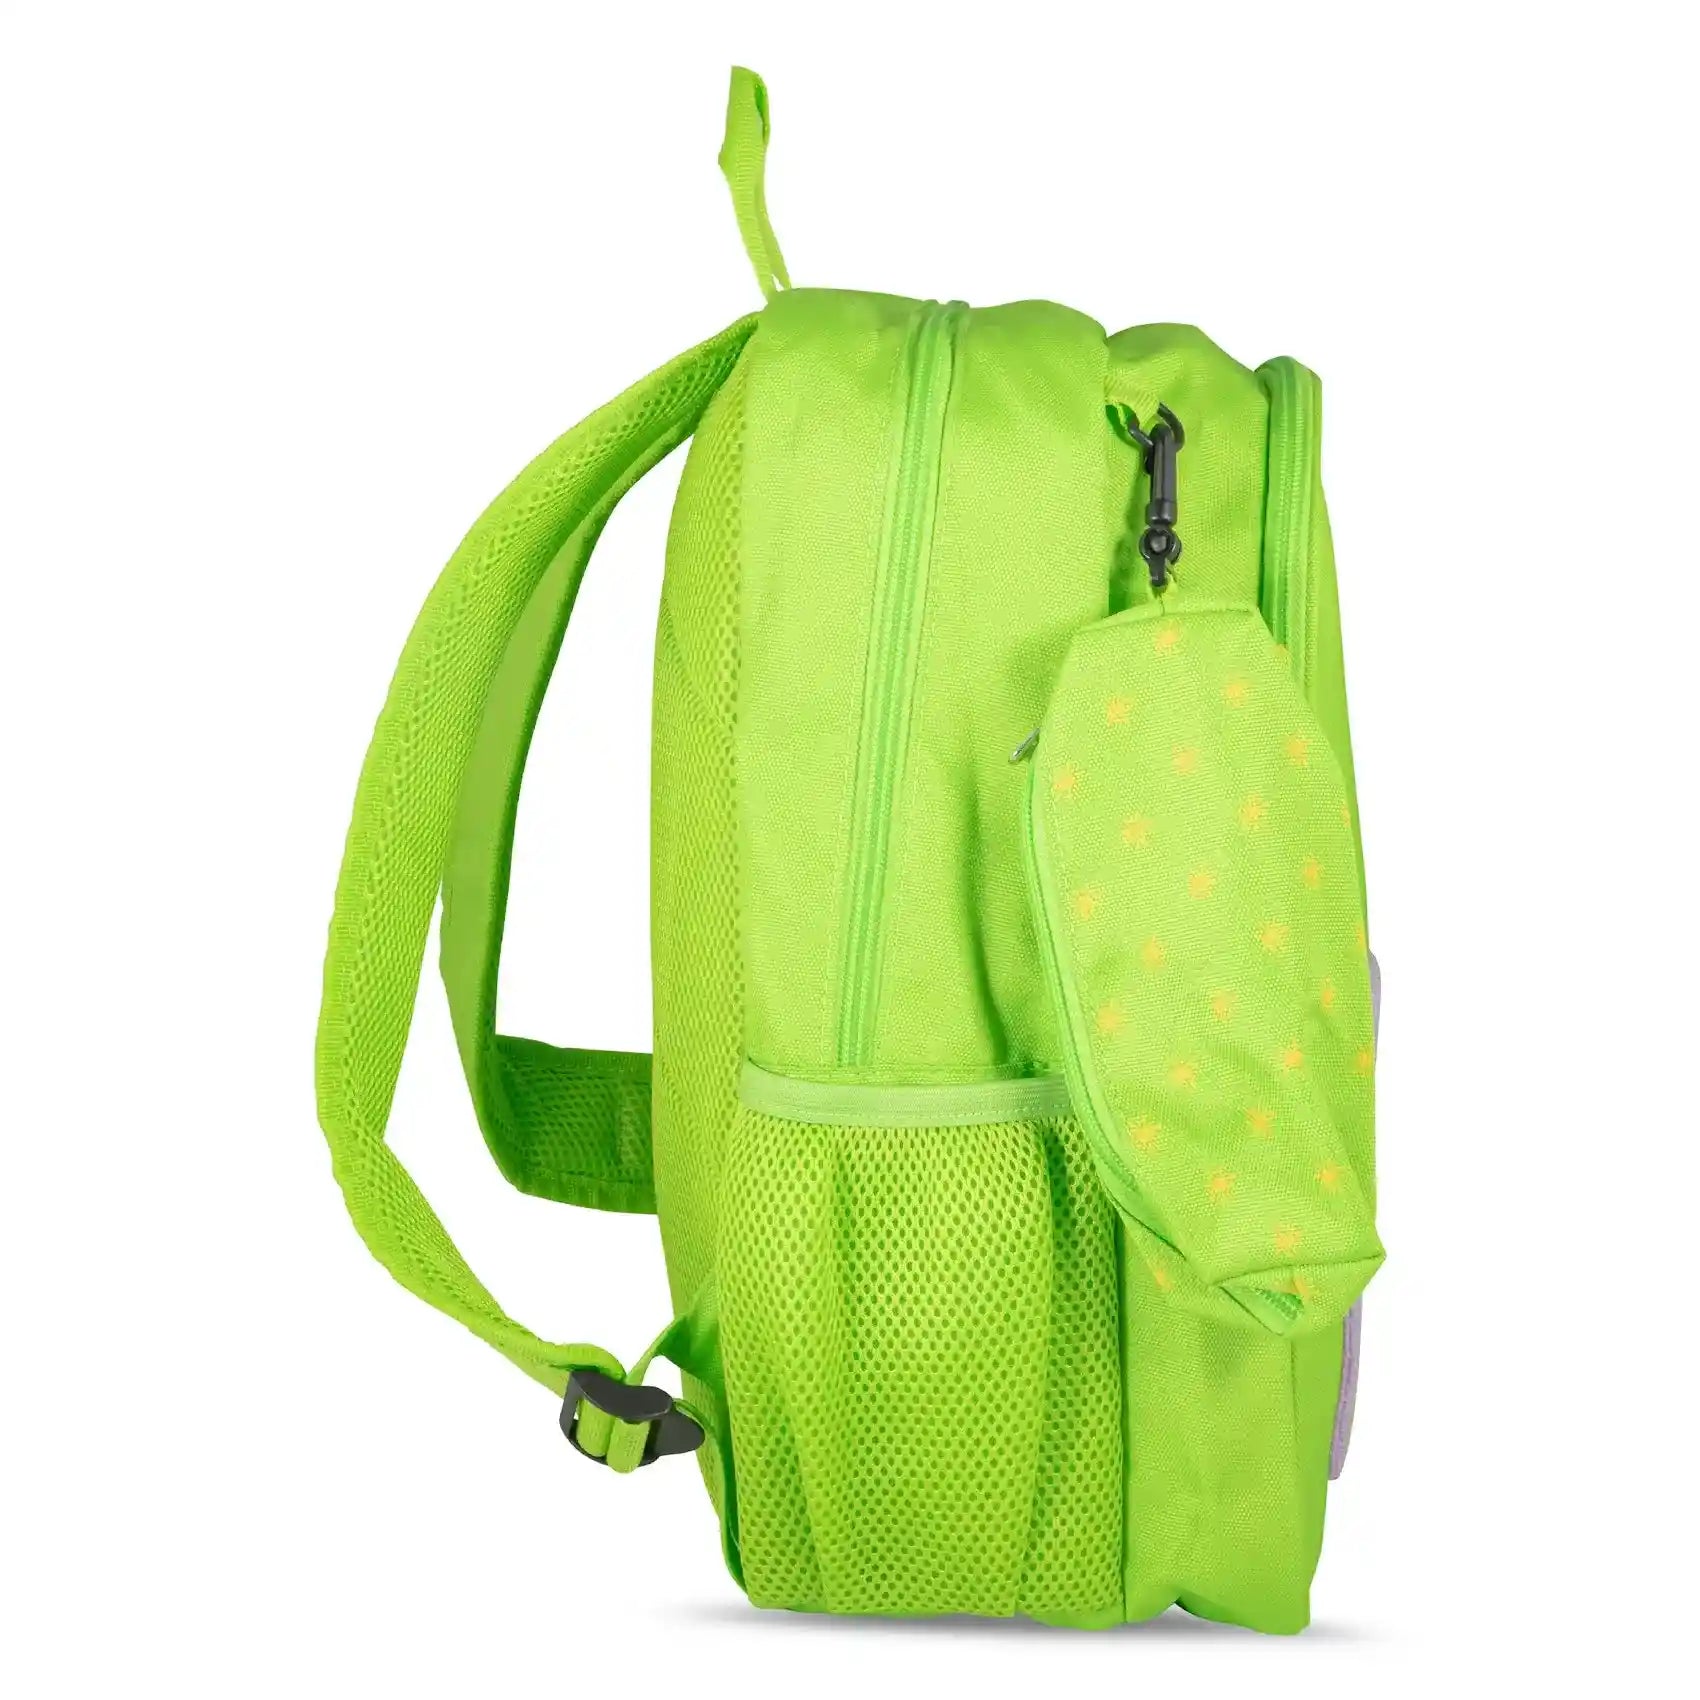 oloe-plush-character-backpack-lozi-green-side-facing